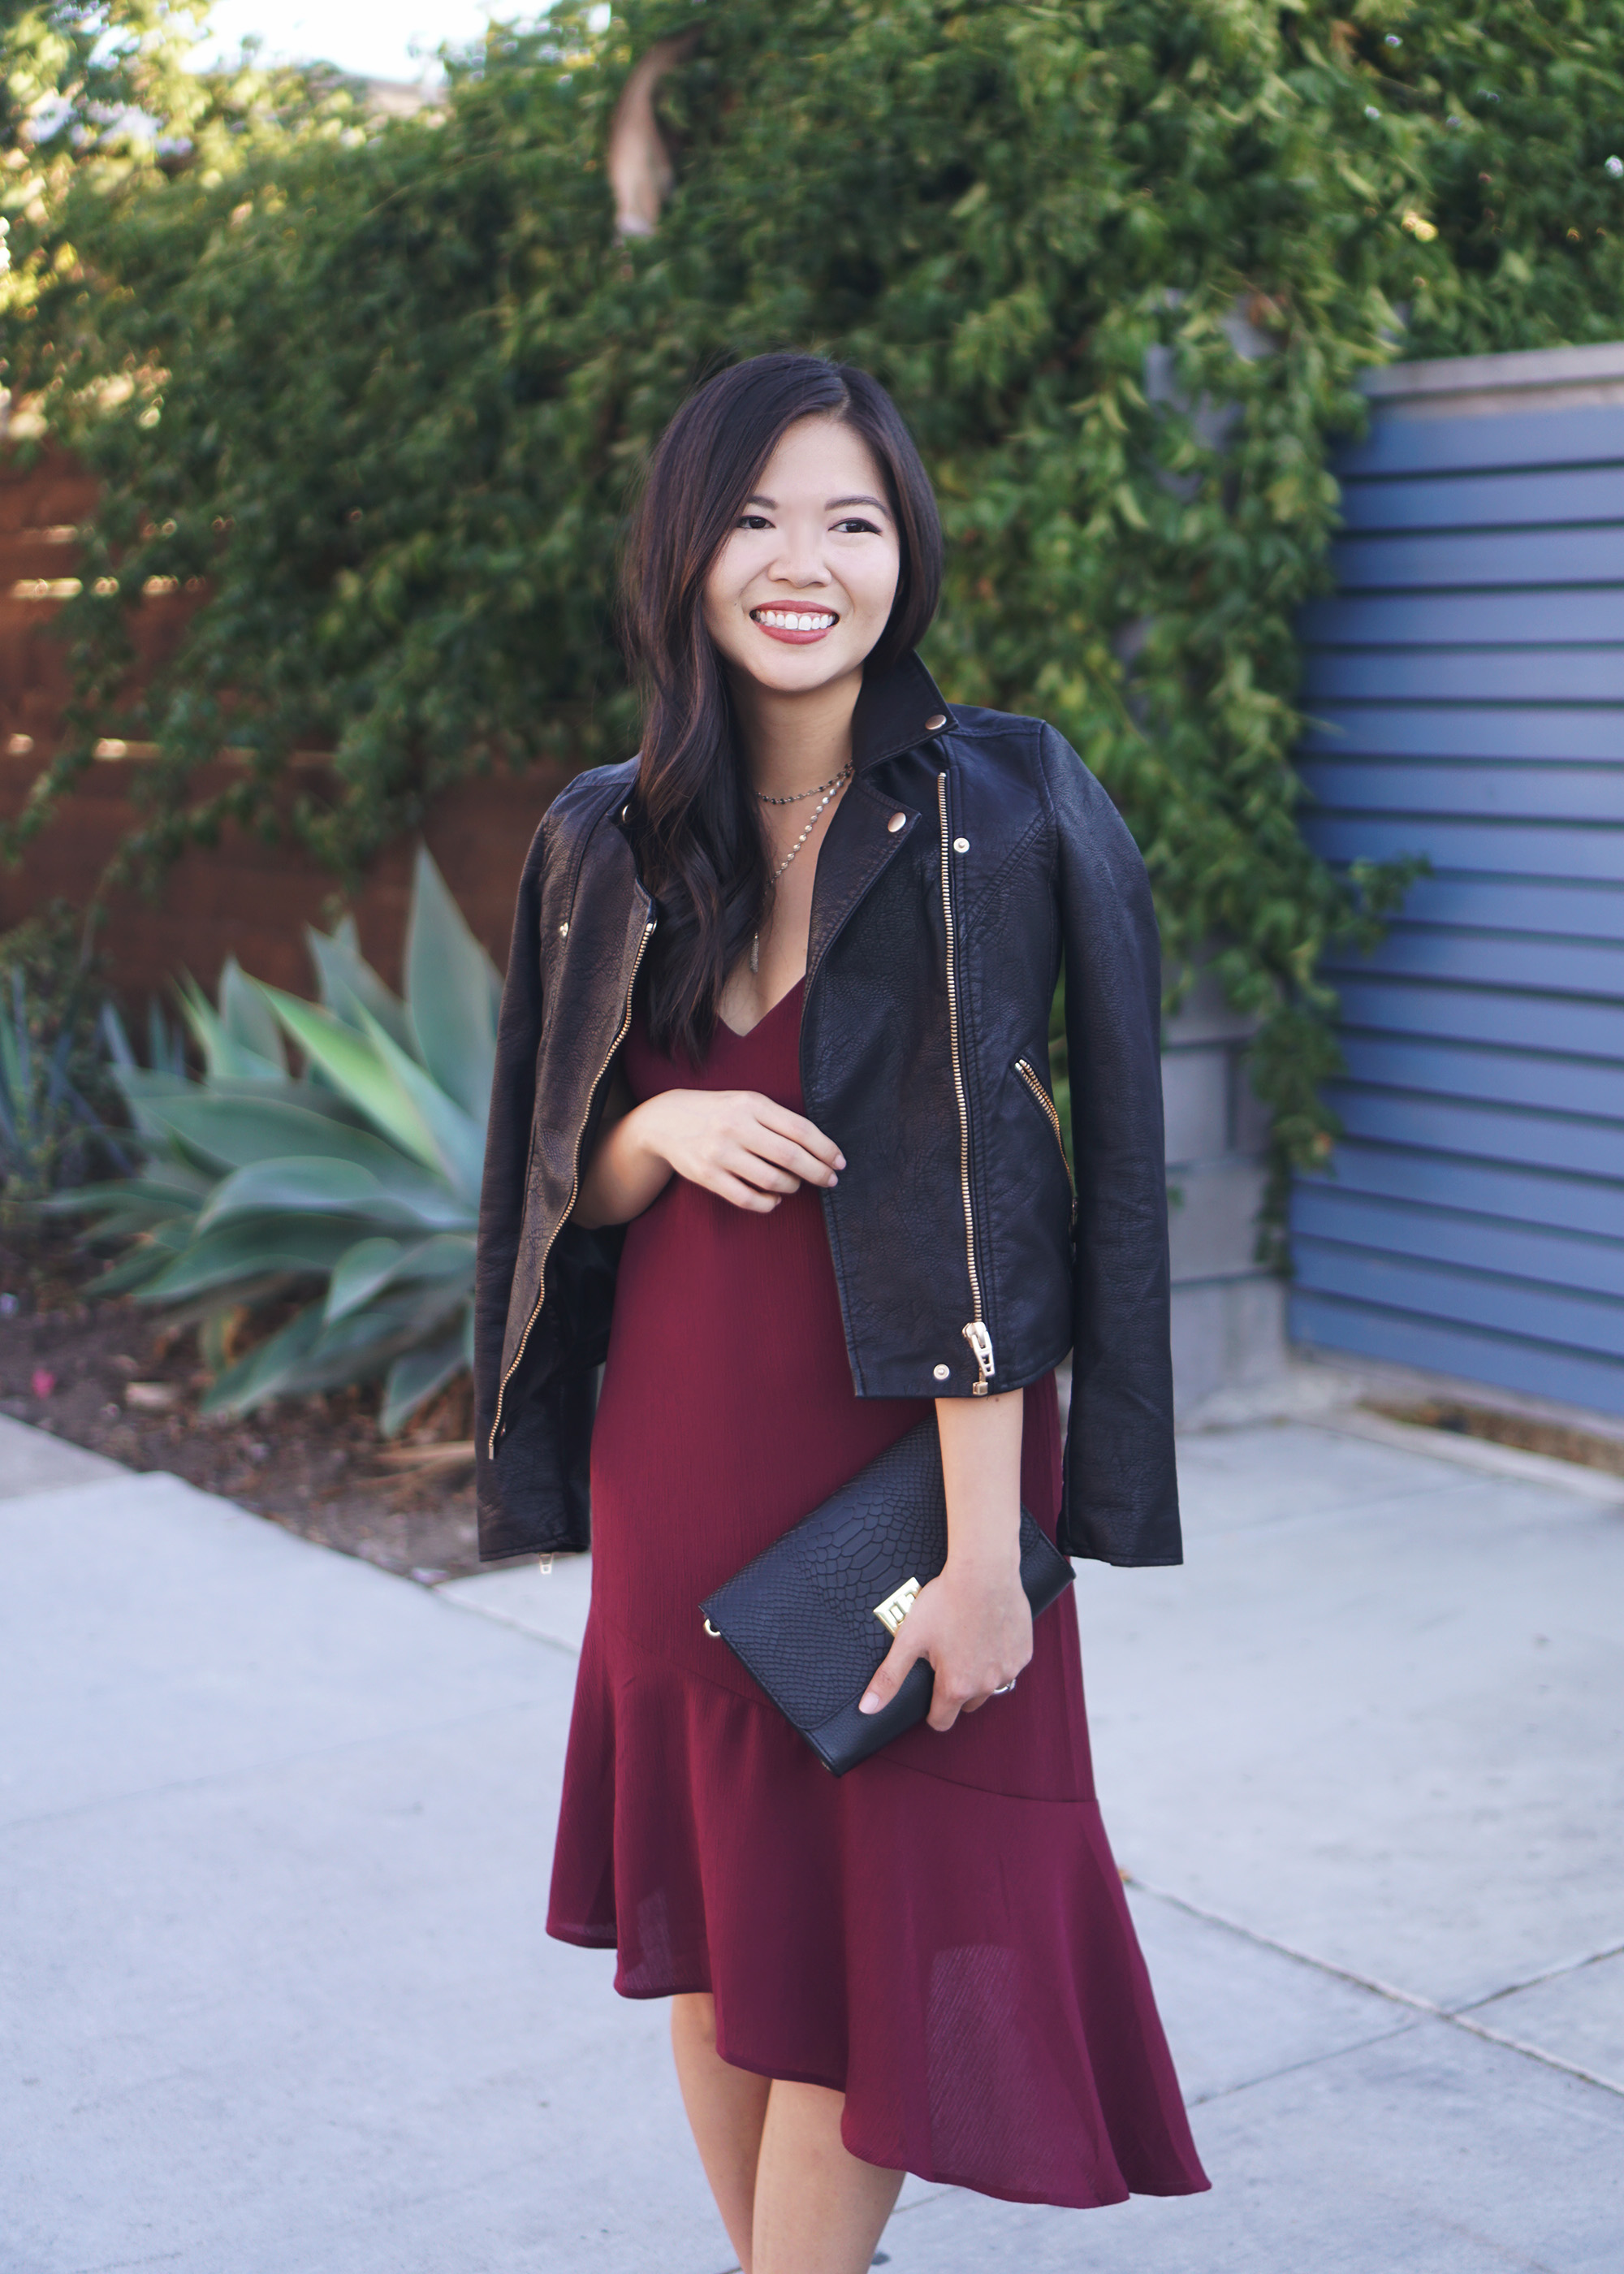 Fall Fashion: Leather Jacket & Burgundy Dress